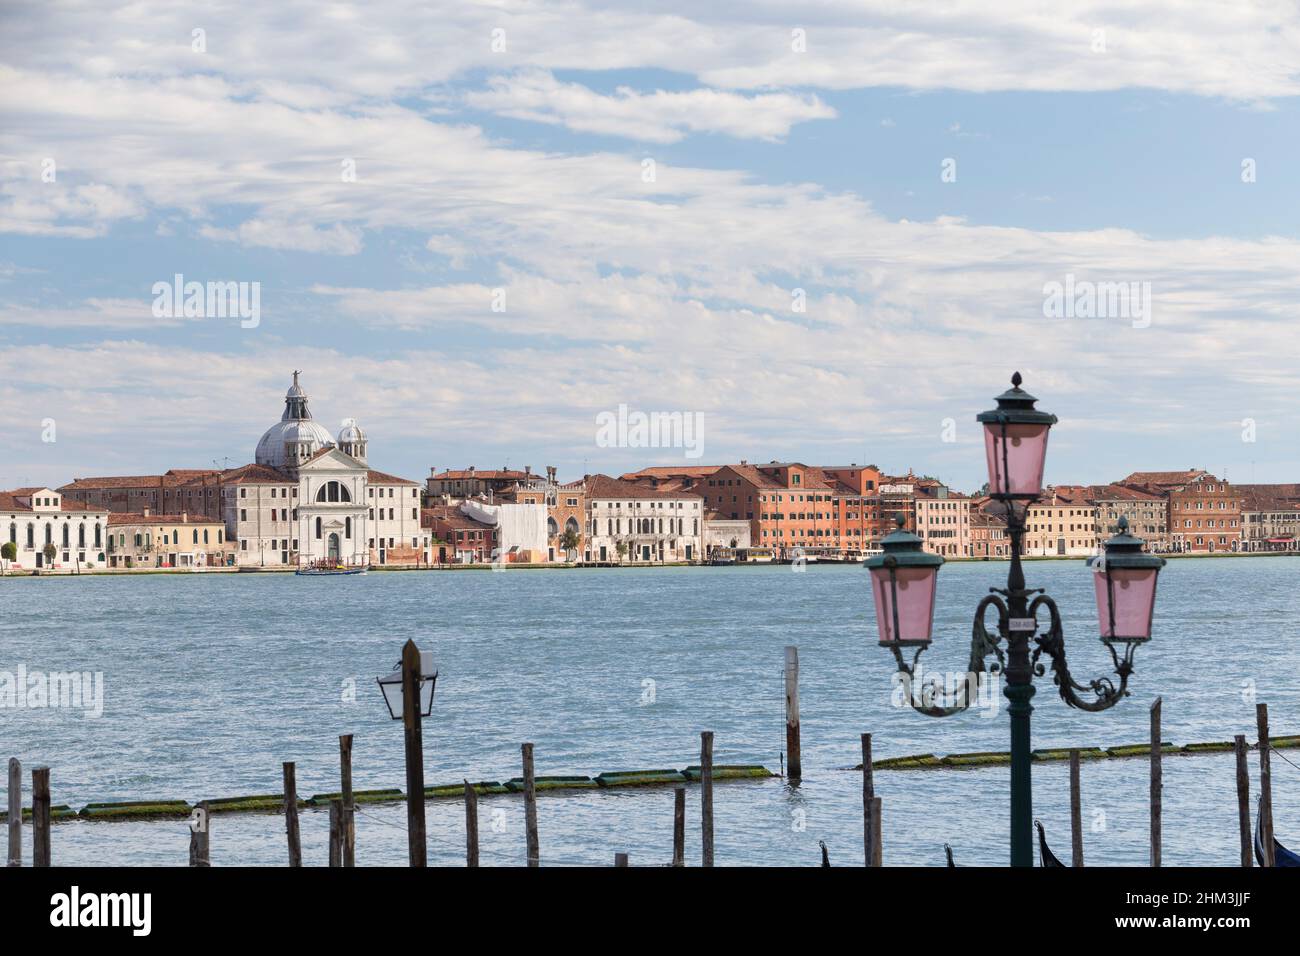 View of the island of Giudecca and the Giudecca canal, Venice, Italy Stock Photo